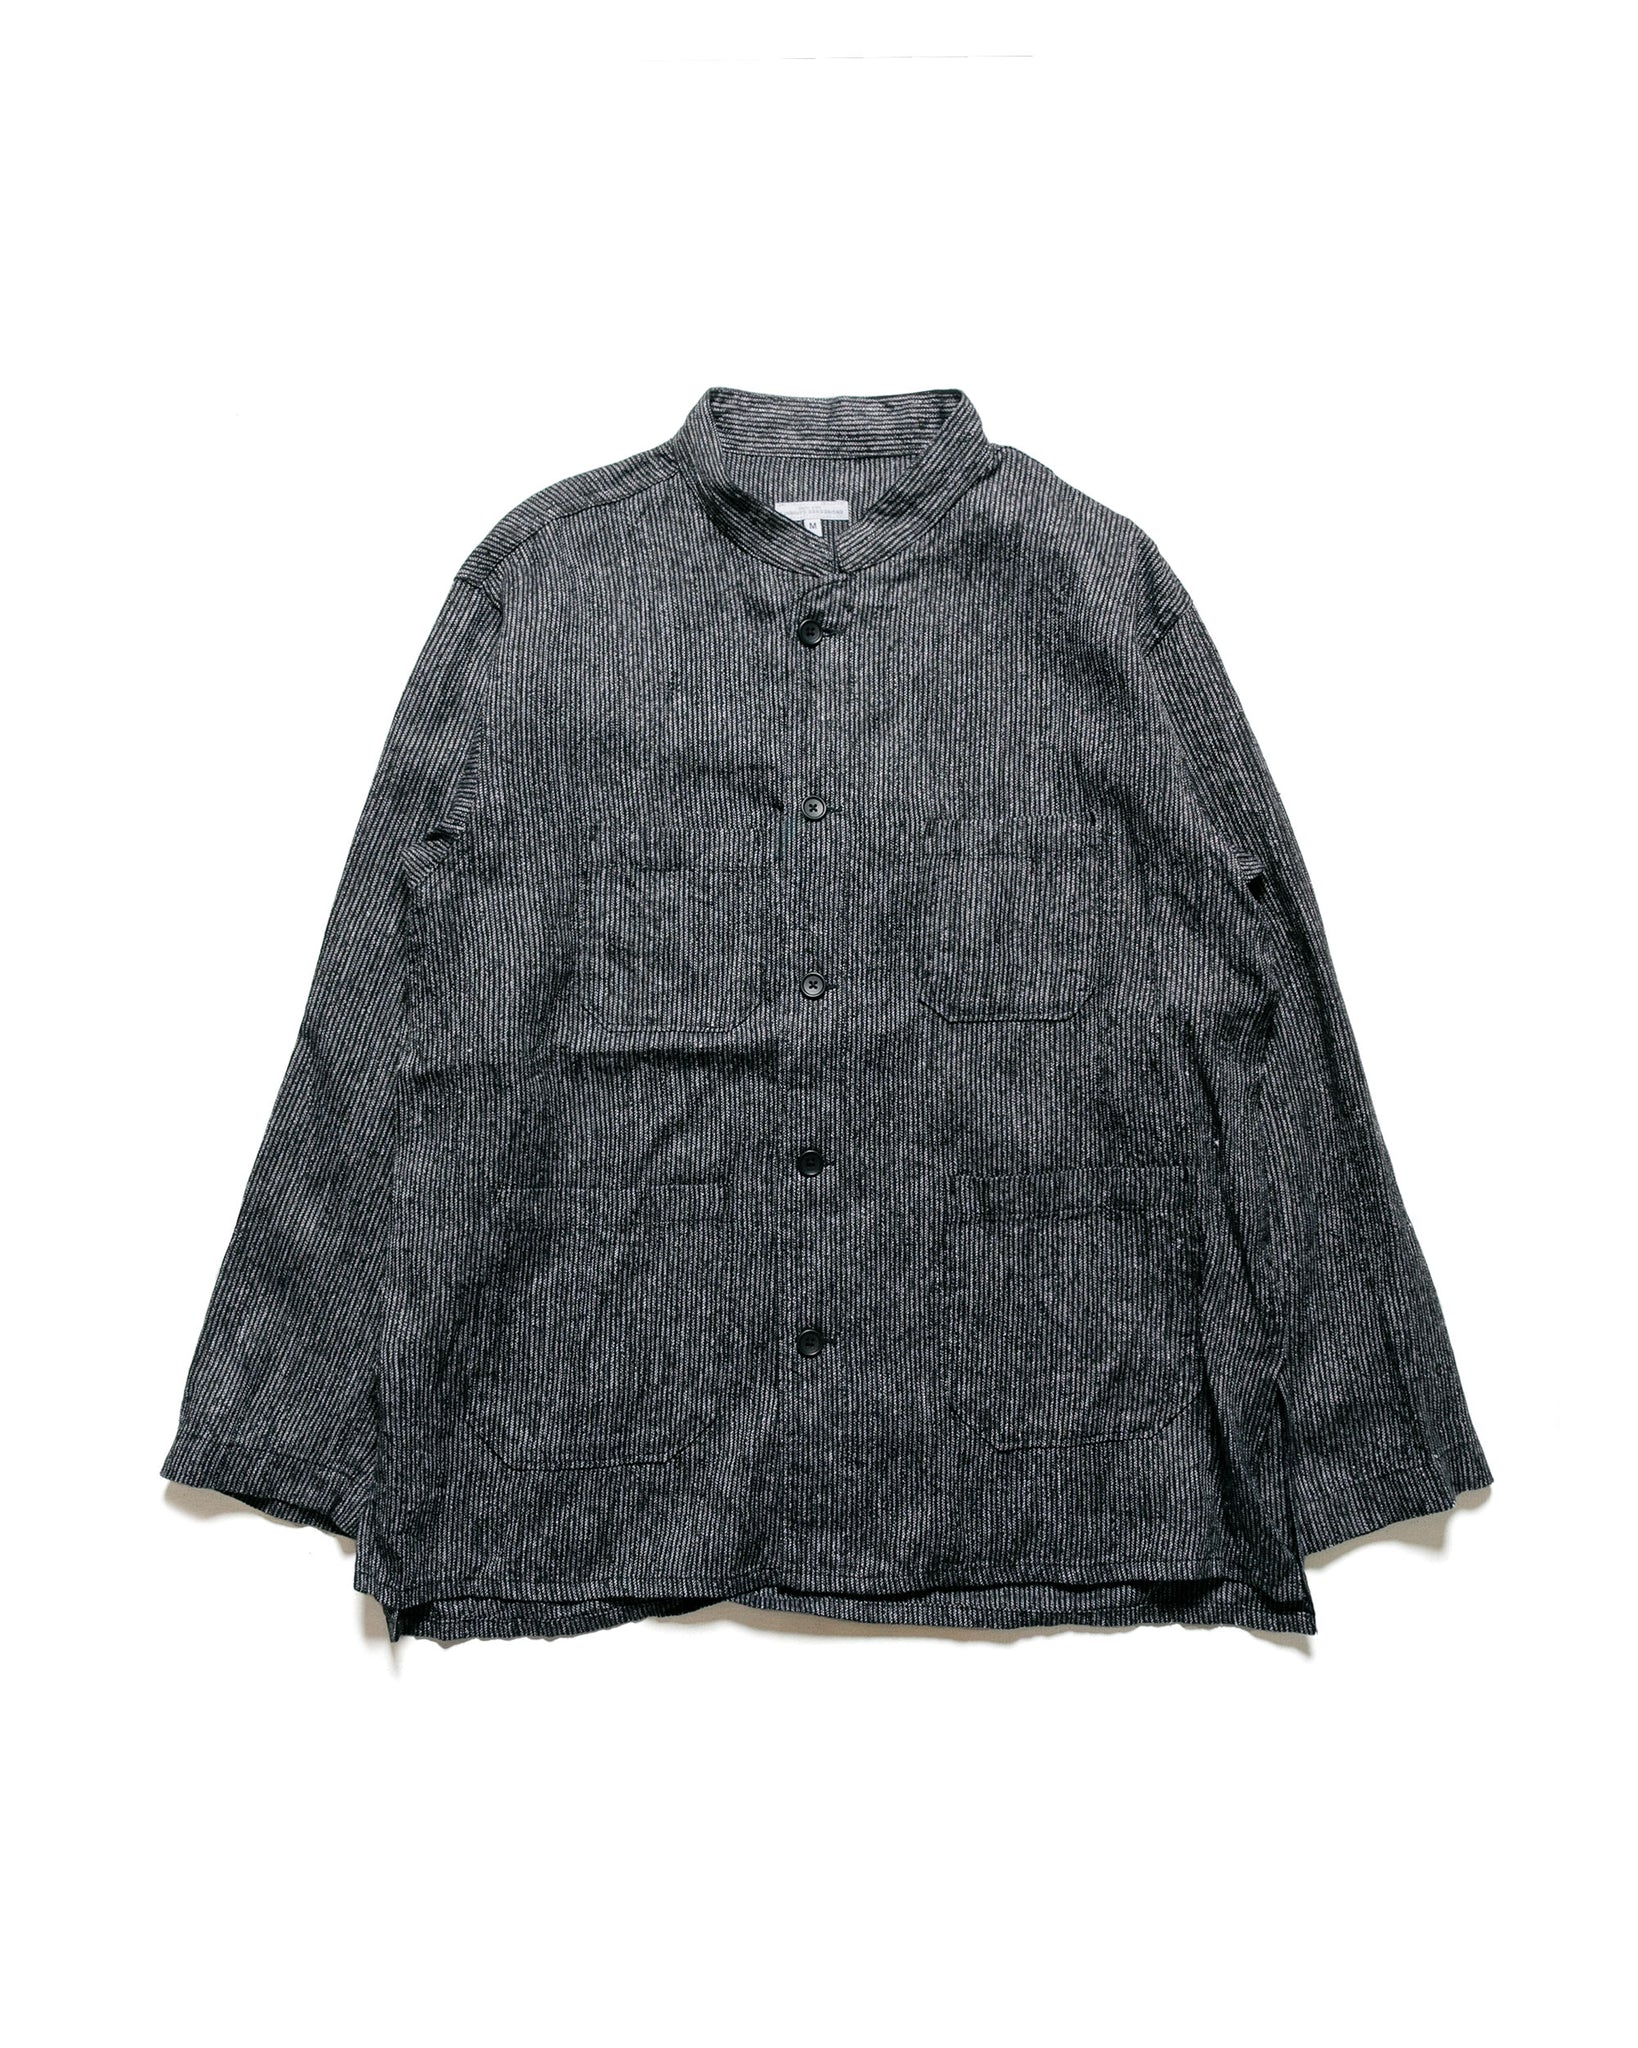 Engineered Garments Dayton Shirt Black/Grey Linen Stripe